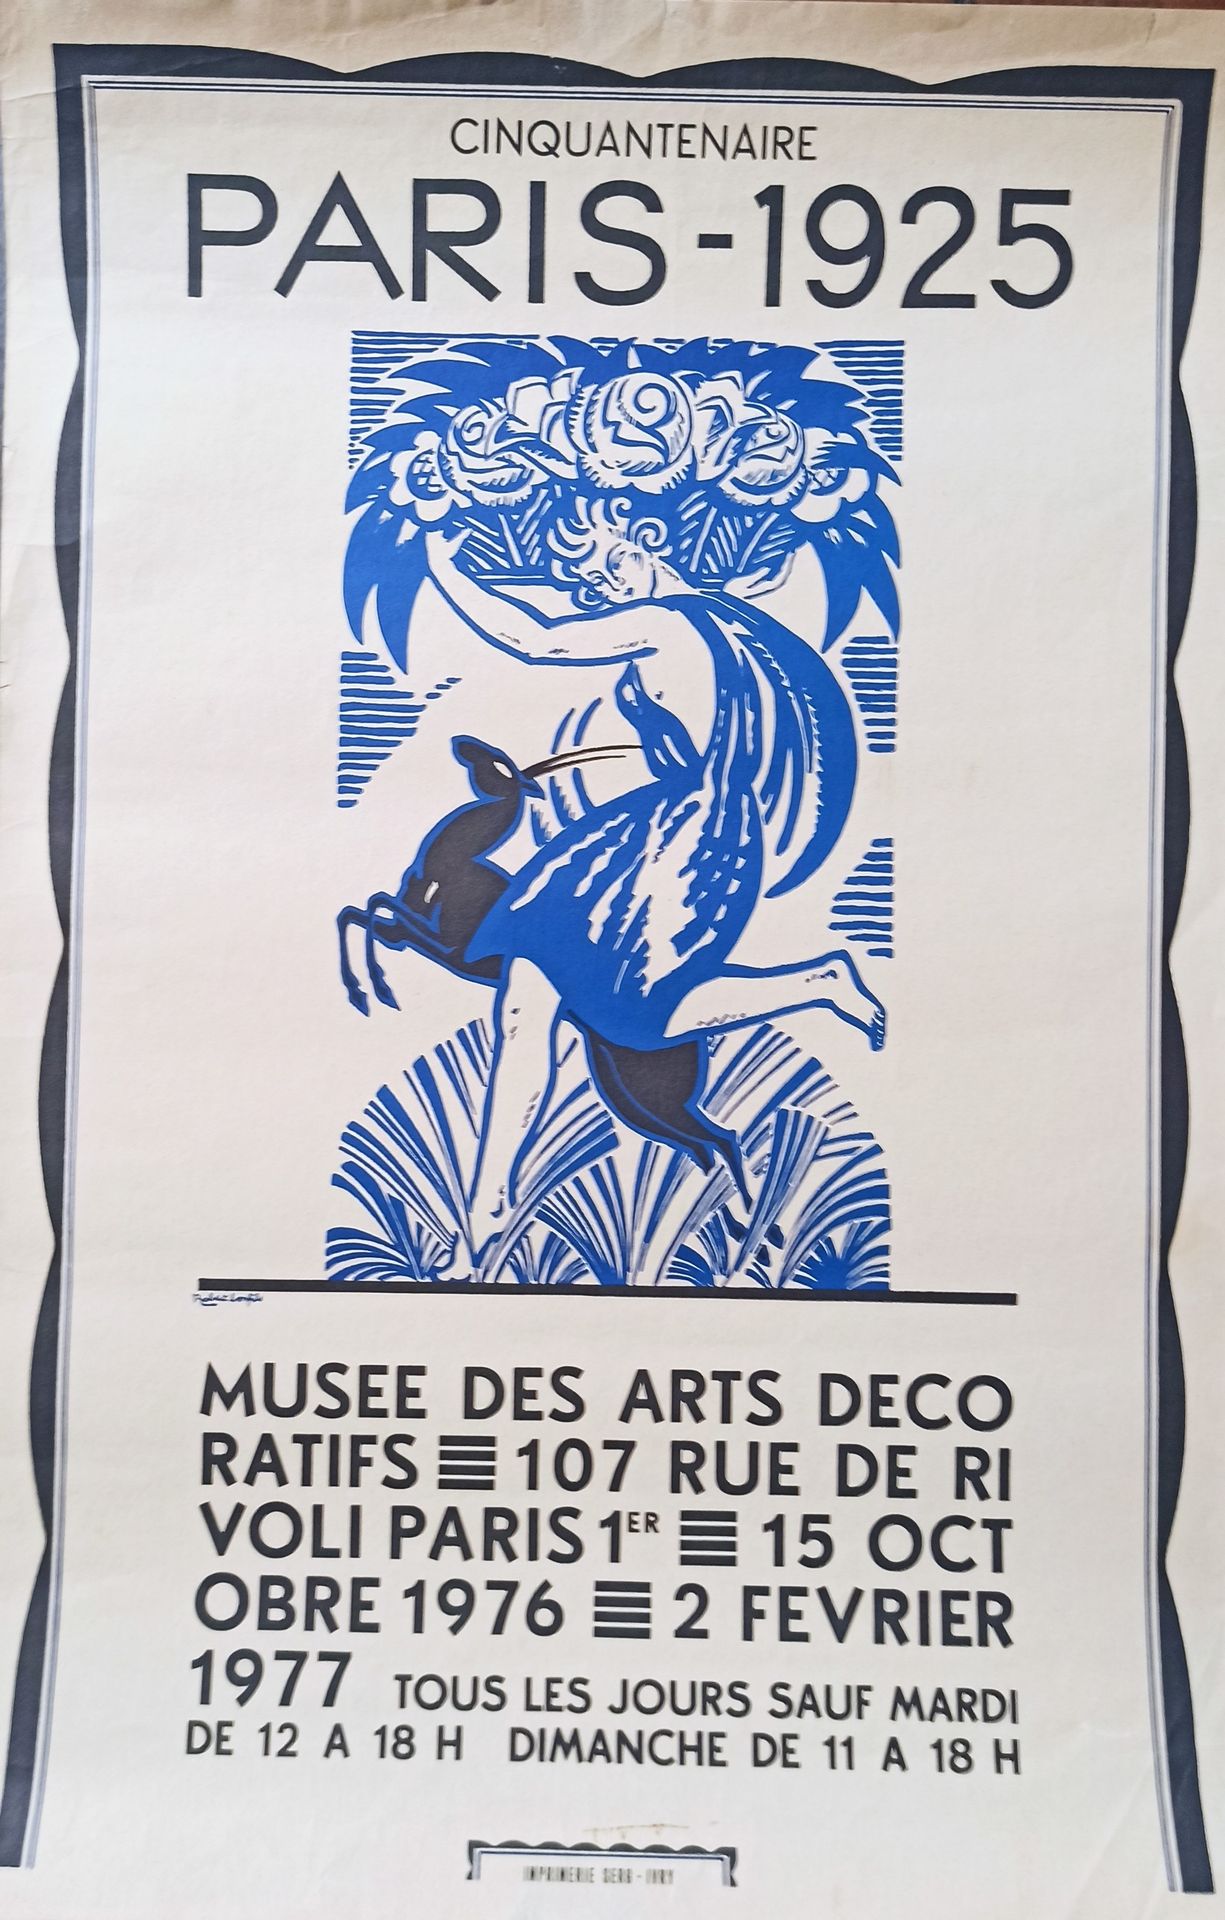 Null ROBERT BONFILS，之后 

1976年10月15日至1977年2月2日在装饰艺术博物馆举办的《巴黎-1925》五十周年纪念海报

由SER&hellip;